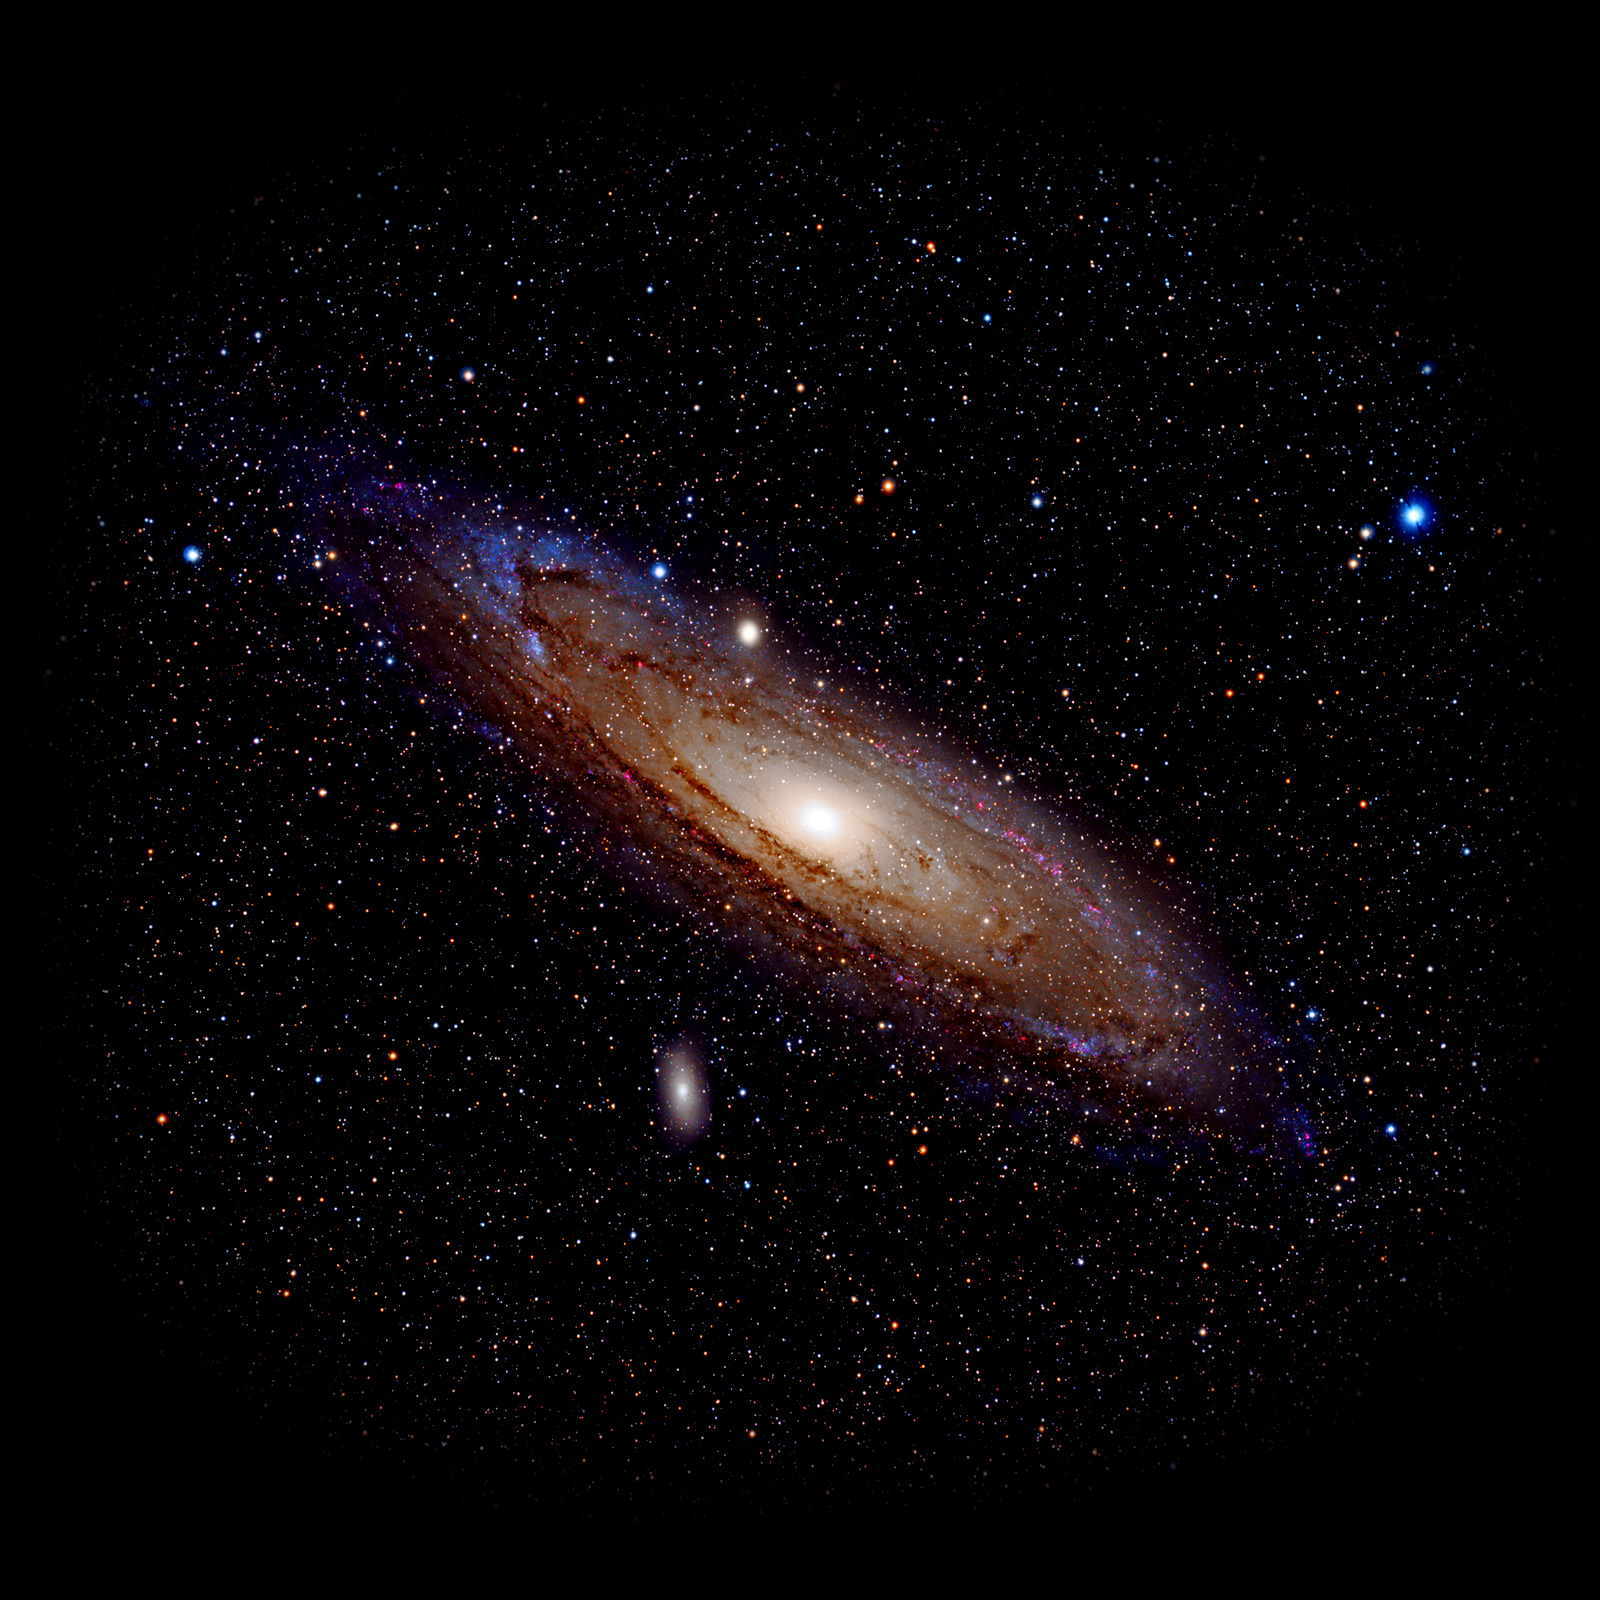 Galaxie Andromède